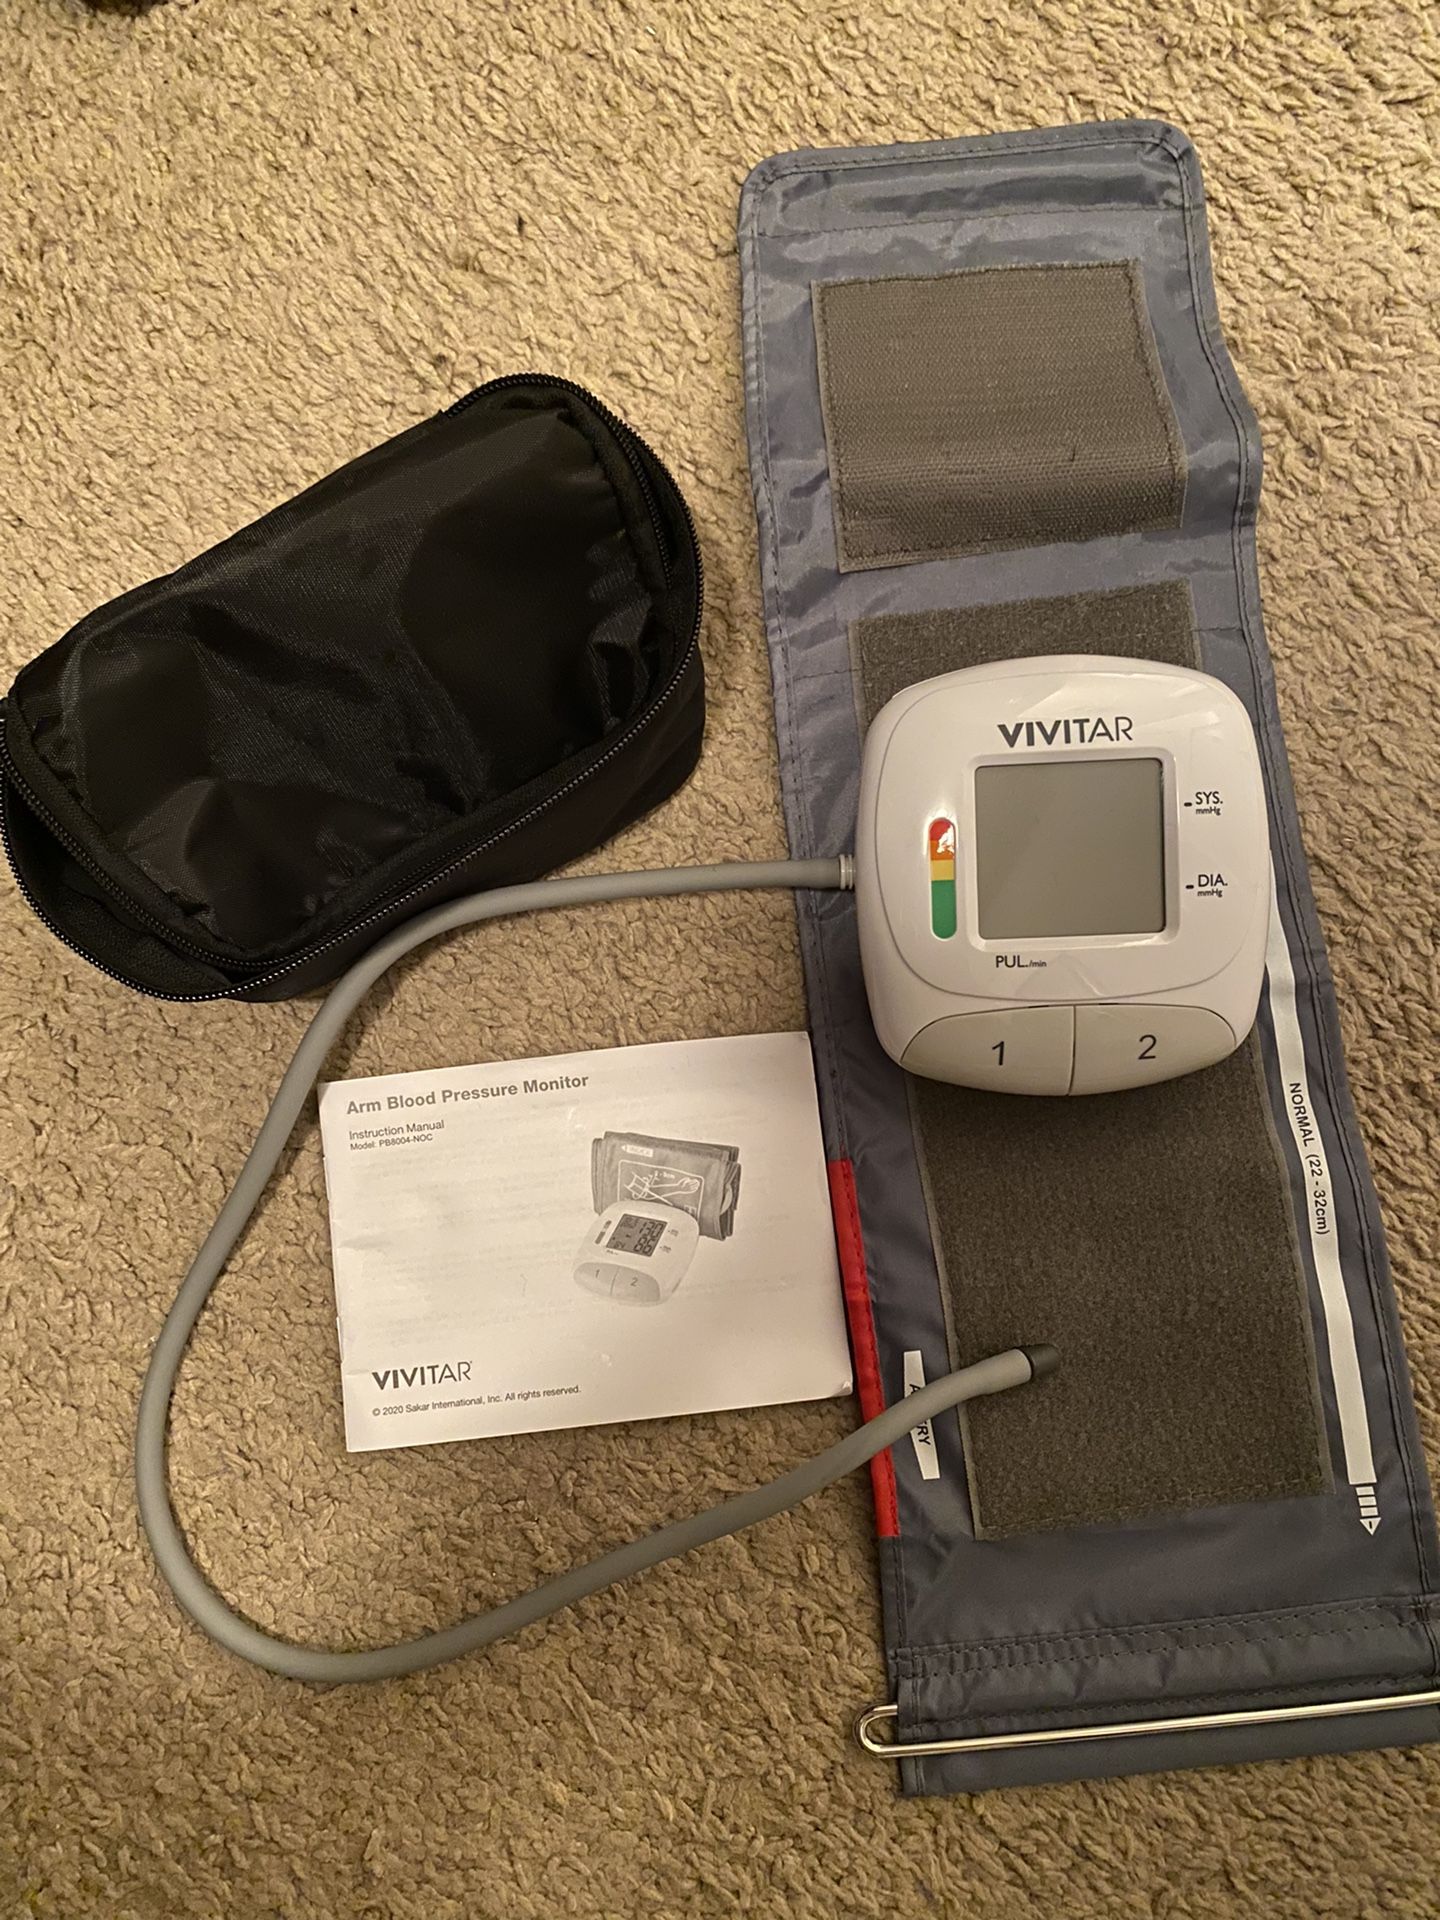 Vivitar Blood Pressure Monitor